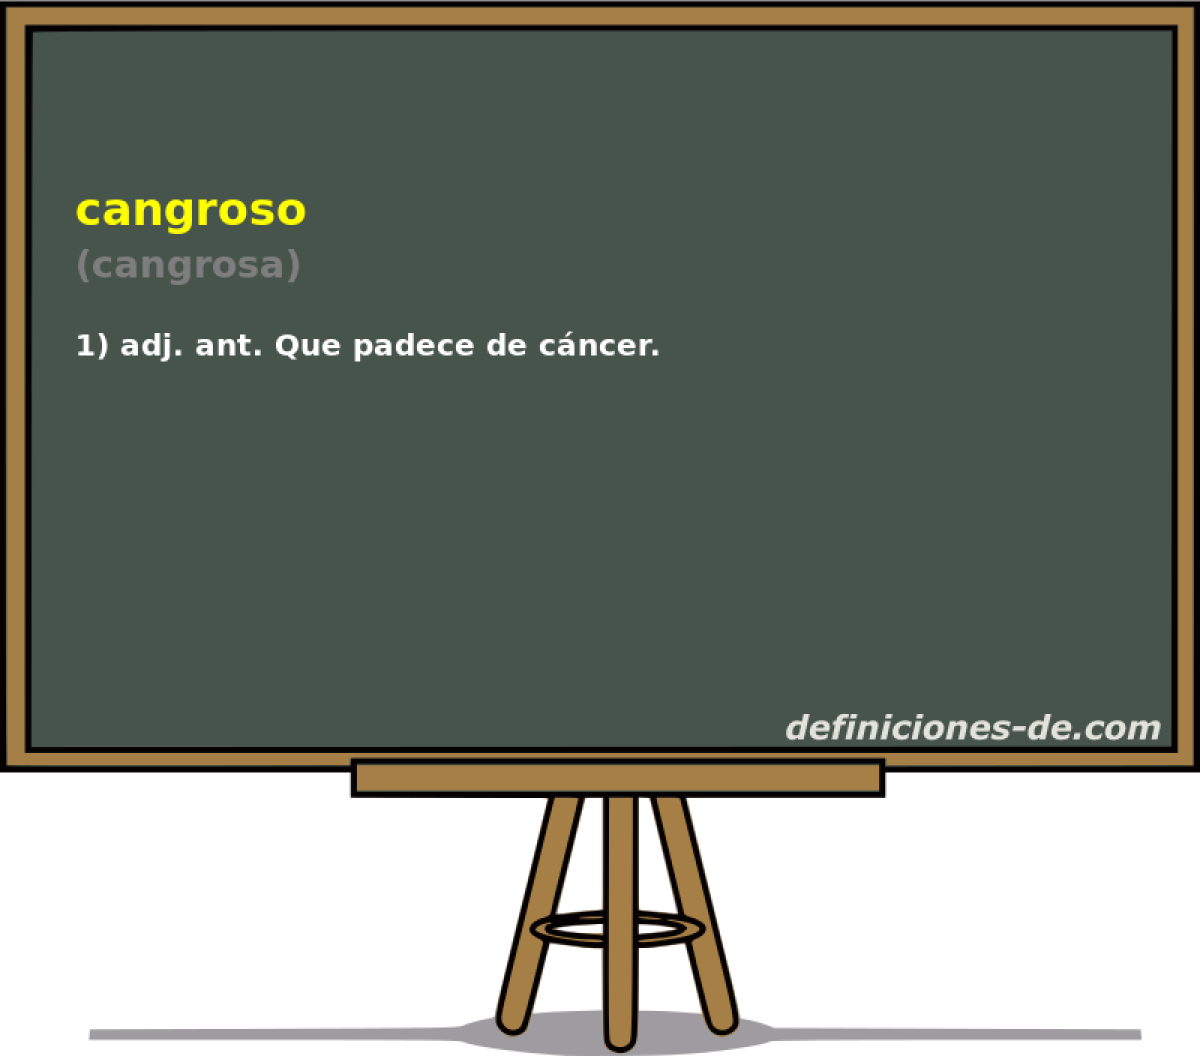 cangroso (cangrosa)